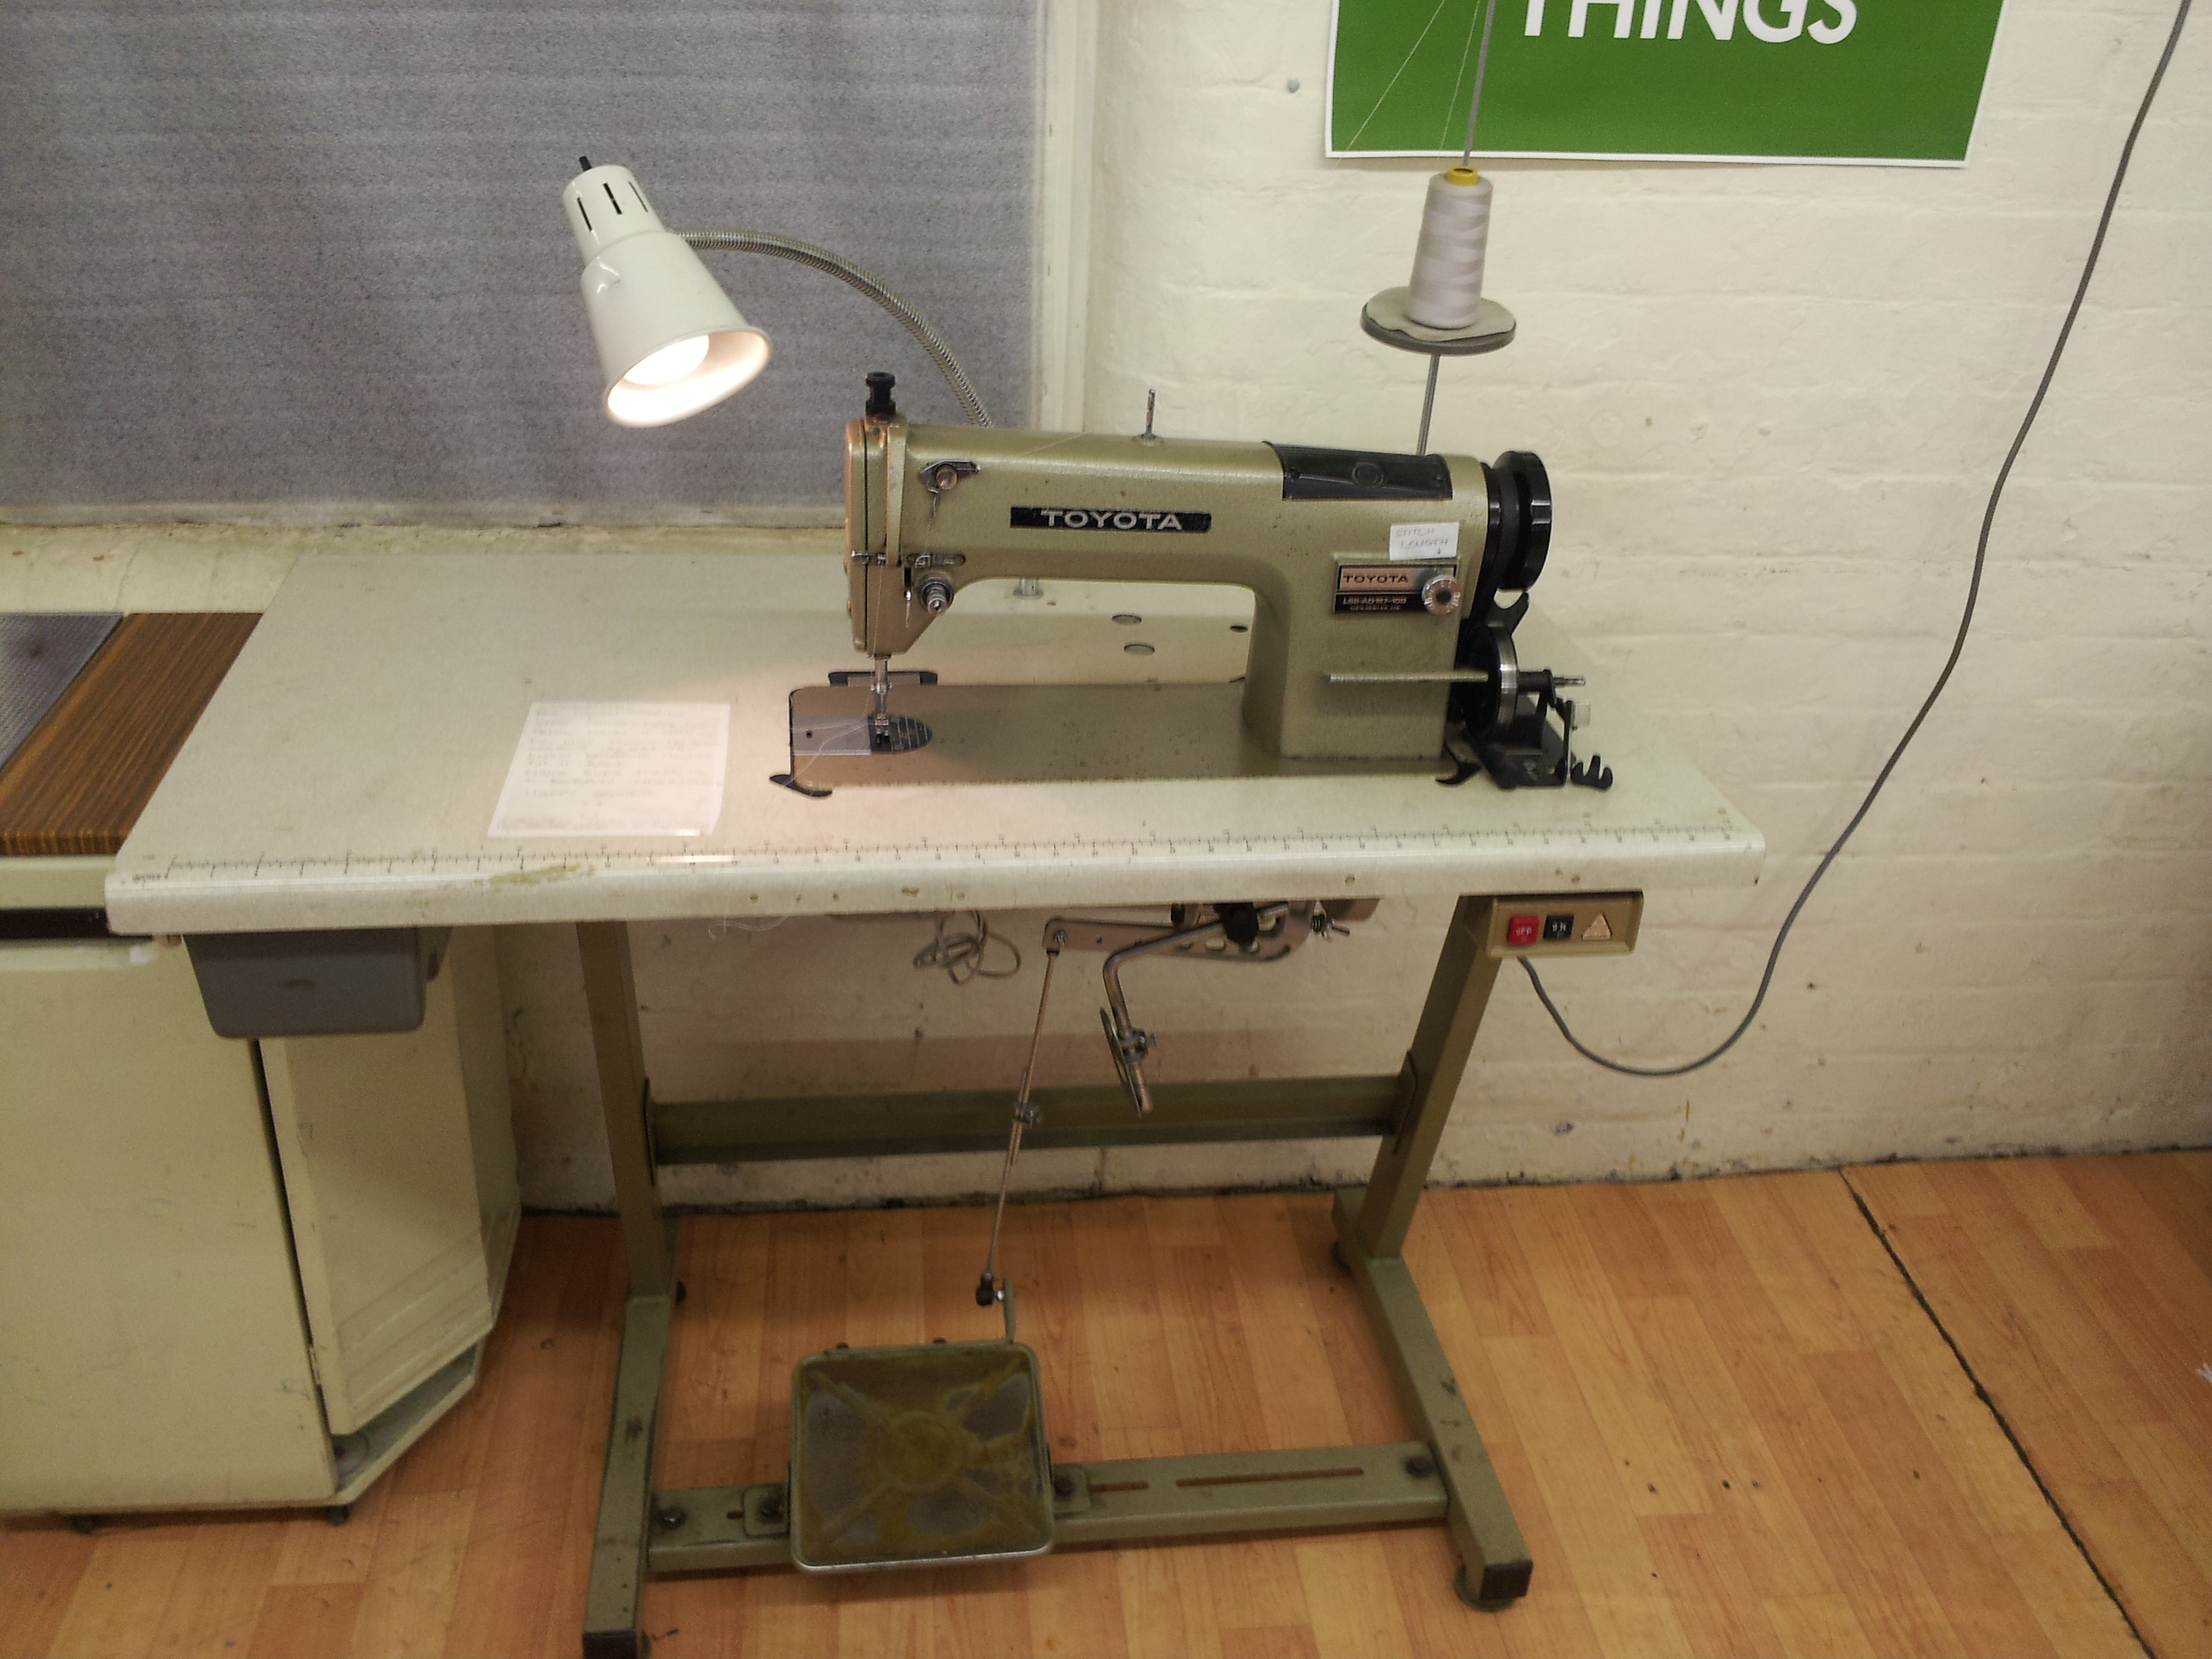 Toyota Sewing Machine in the Studio